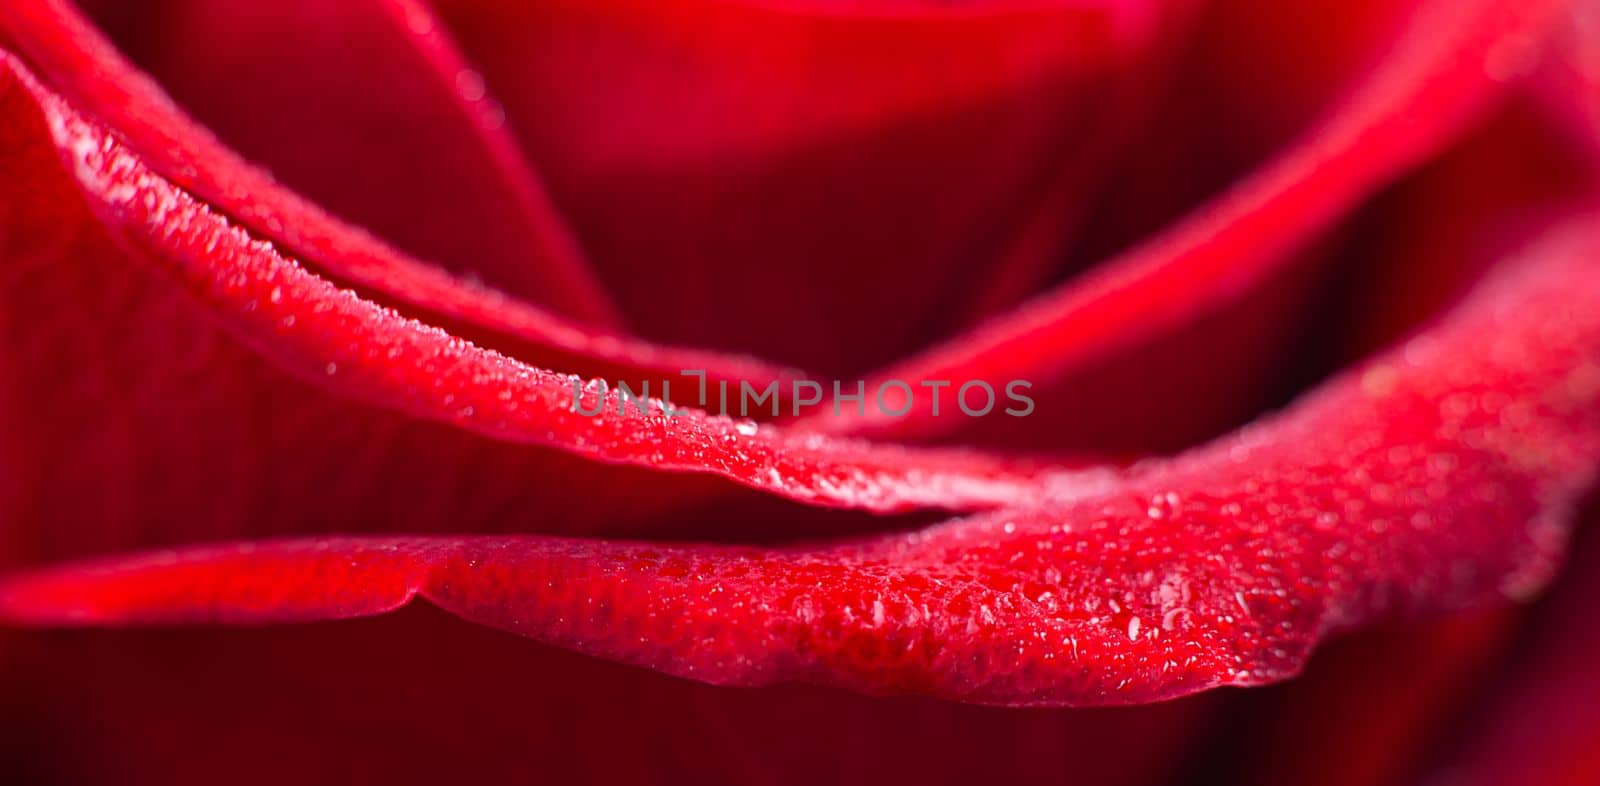 close up red rose macro background by Kondrateva